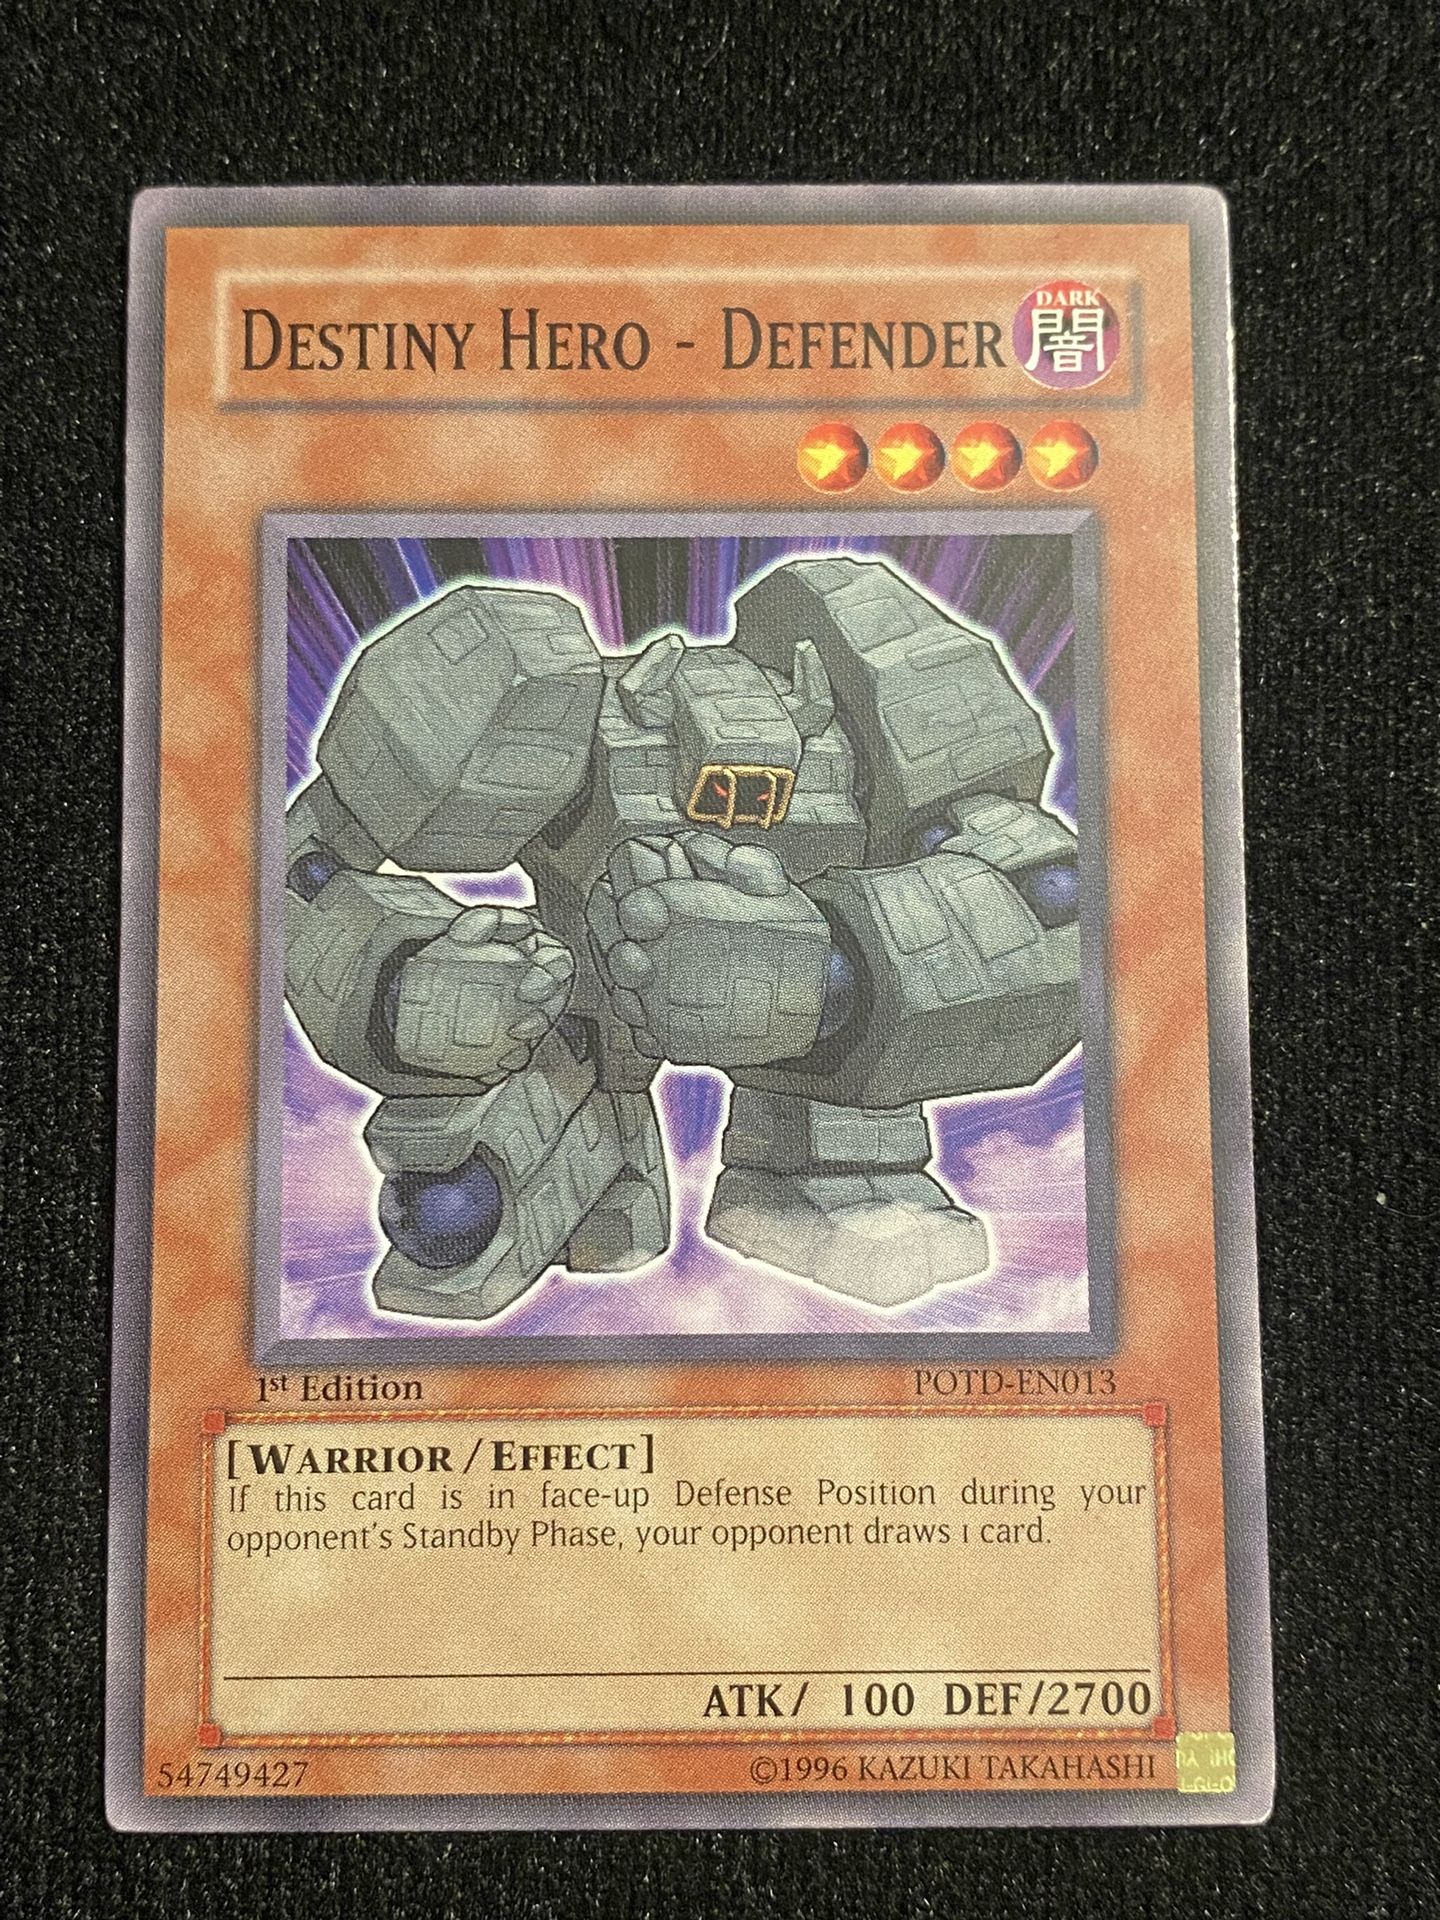 First Edition Destiny Hero - Defender Yugioh Trading Card